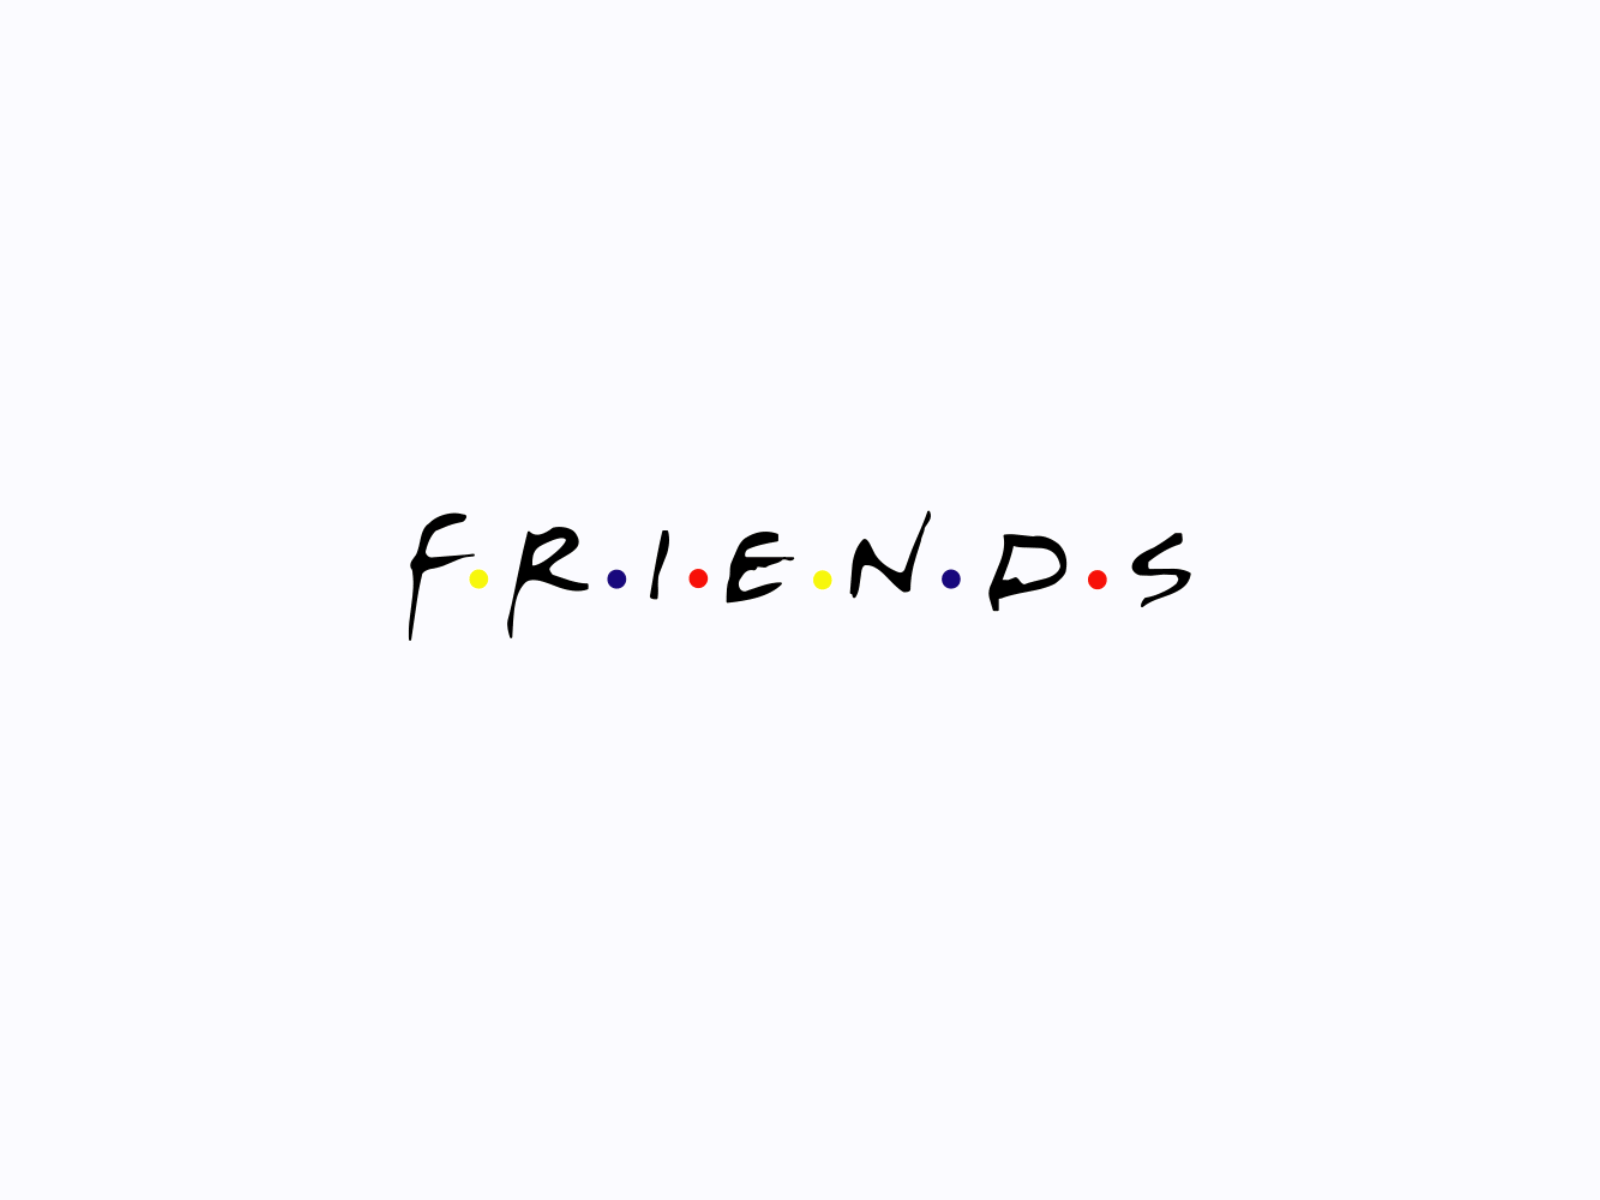 Friends logo animation by KSENIIA FAST on Dribbble